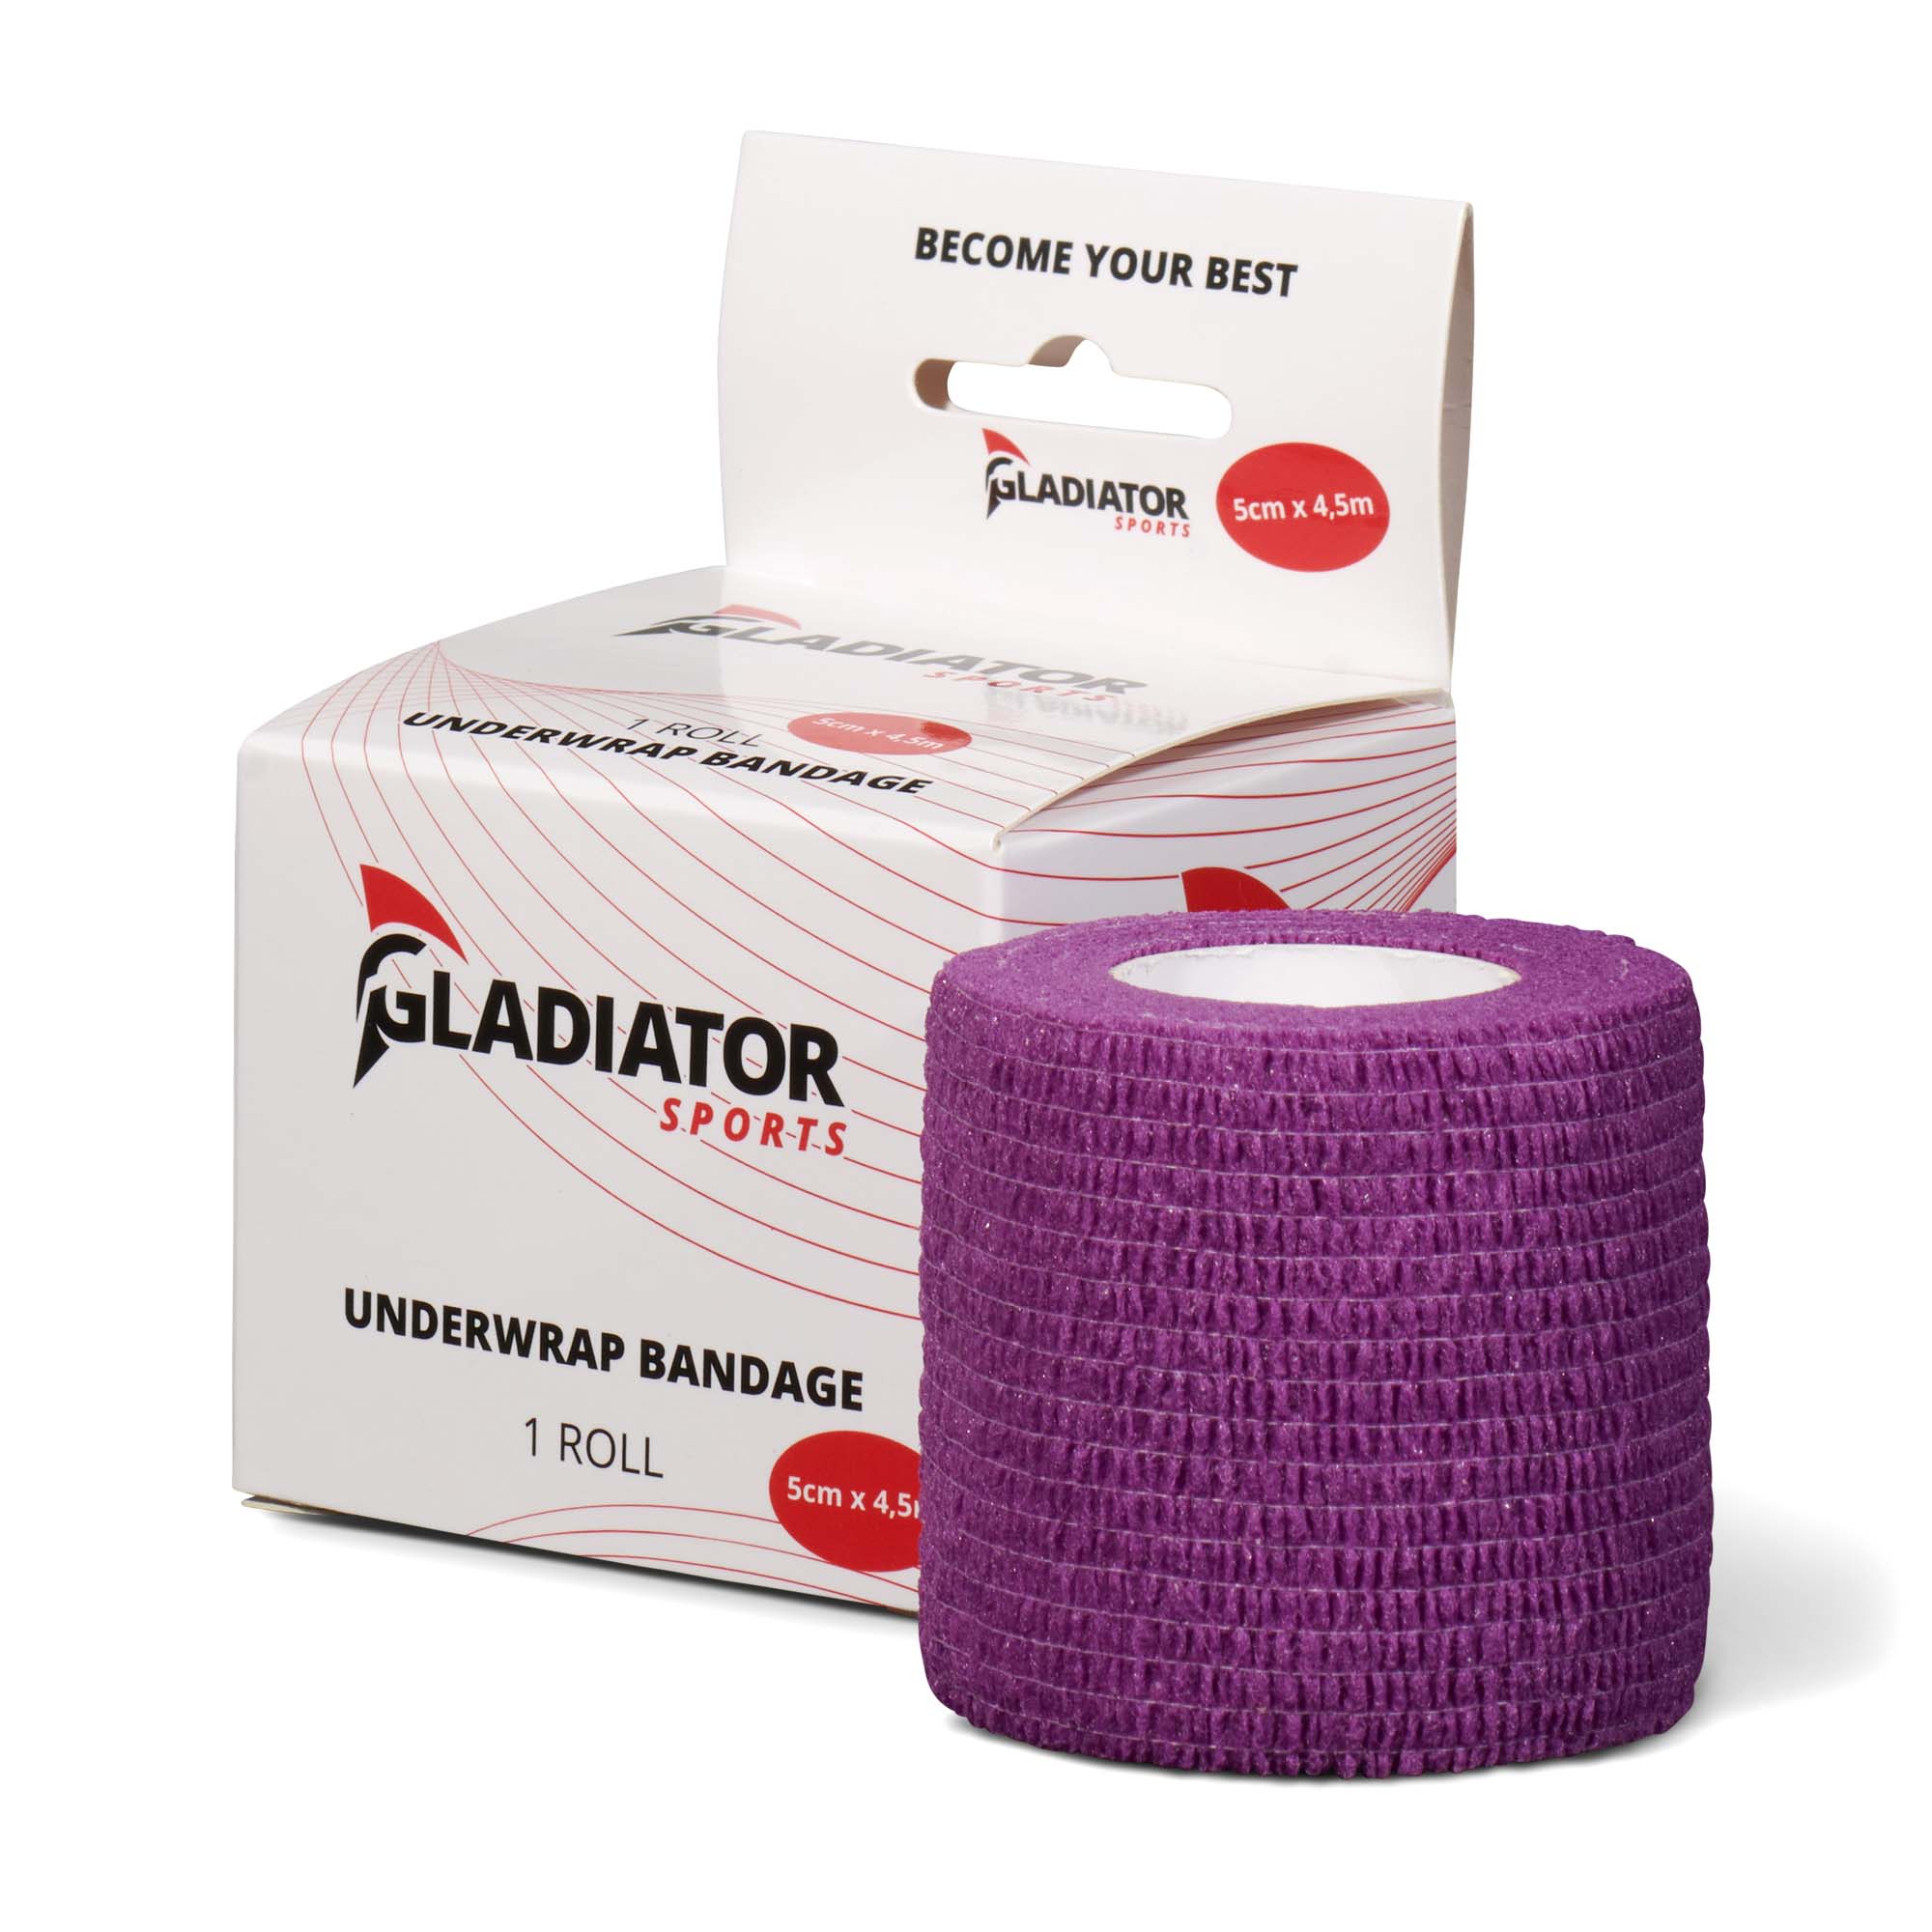 gladiator sports underwrap bandage per roll purple with box